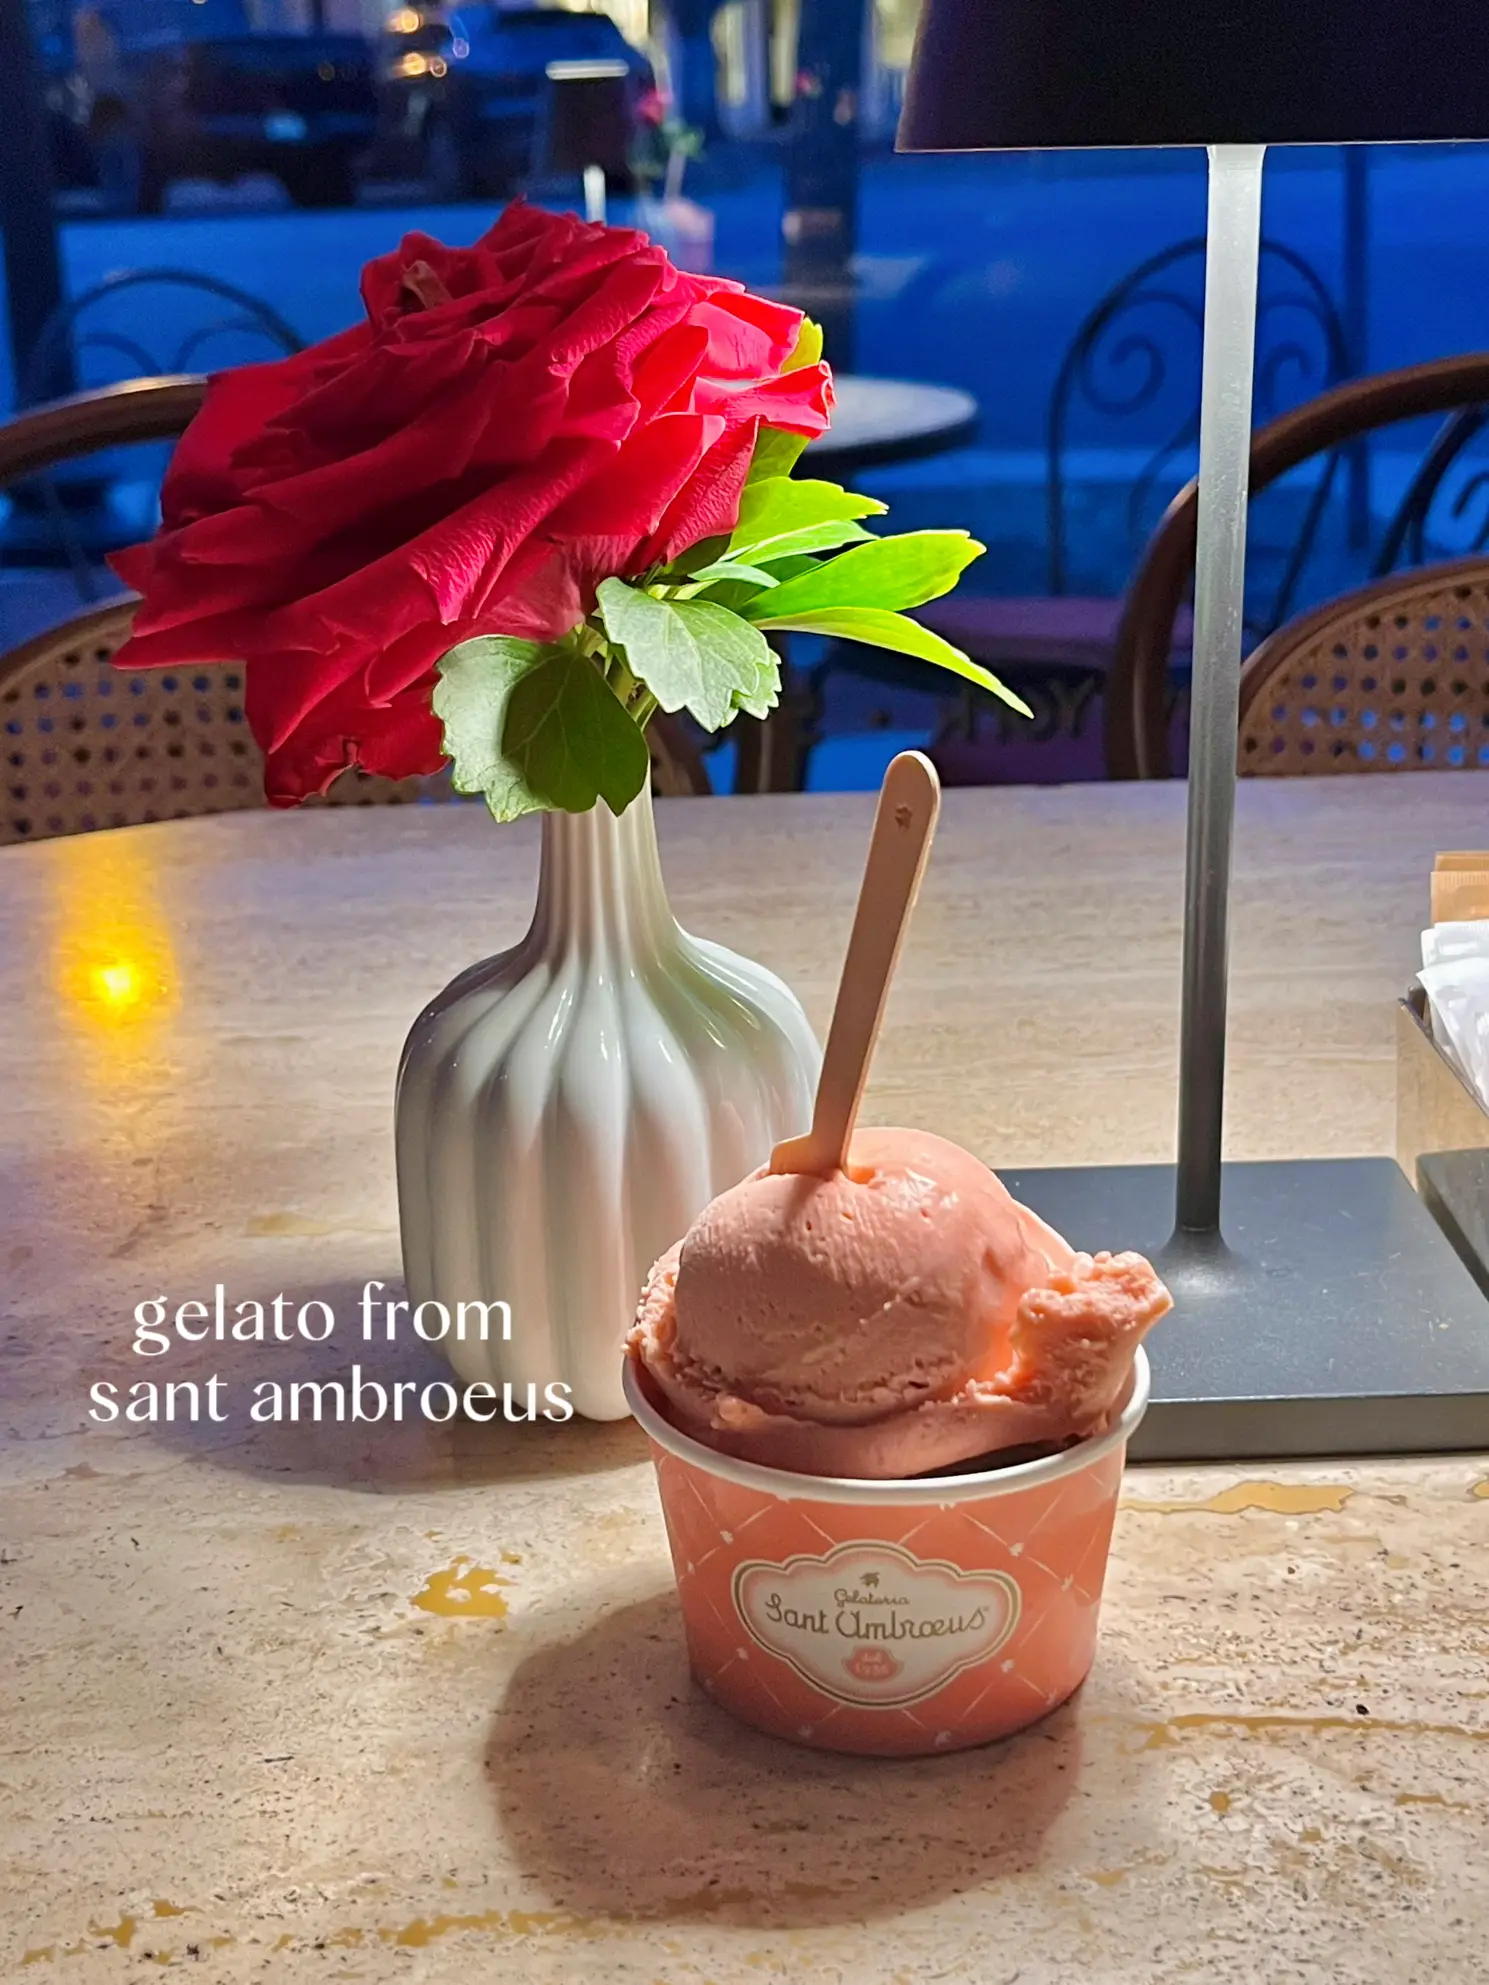  A bowl of sant ambroeus gelato.